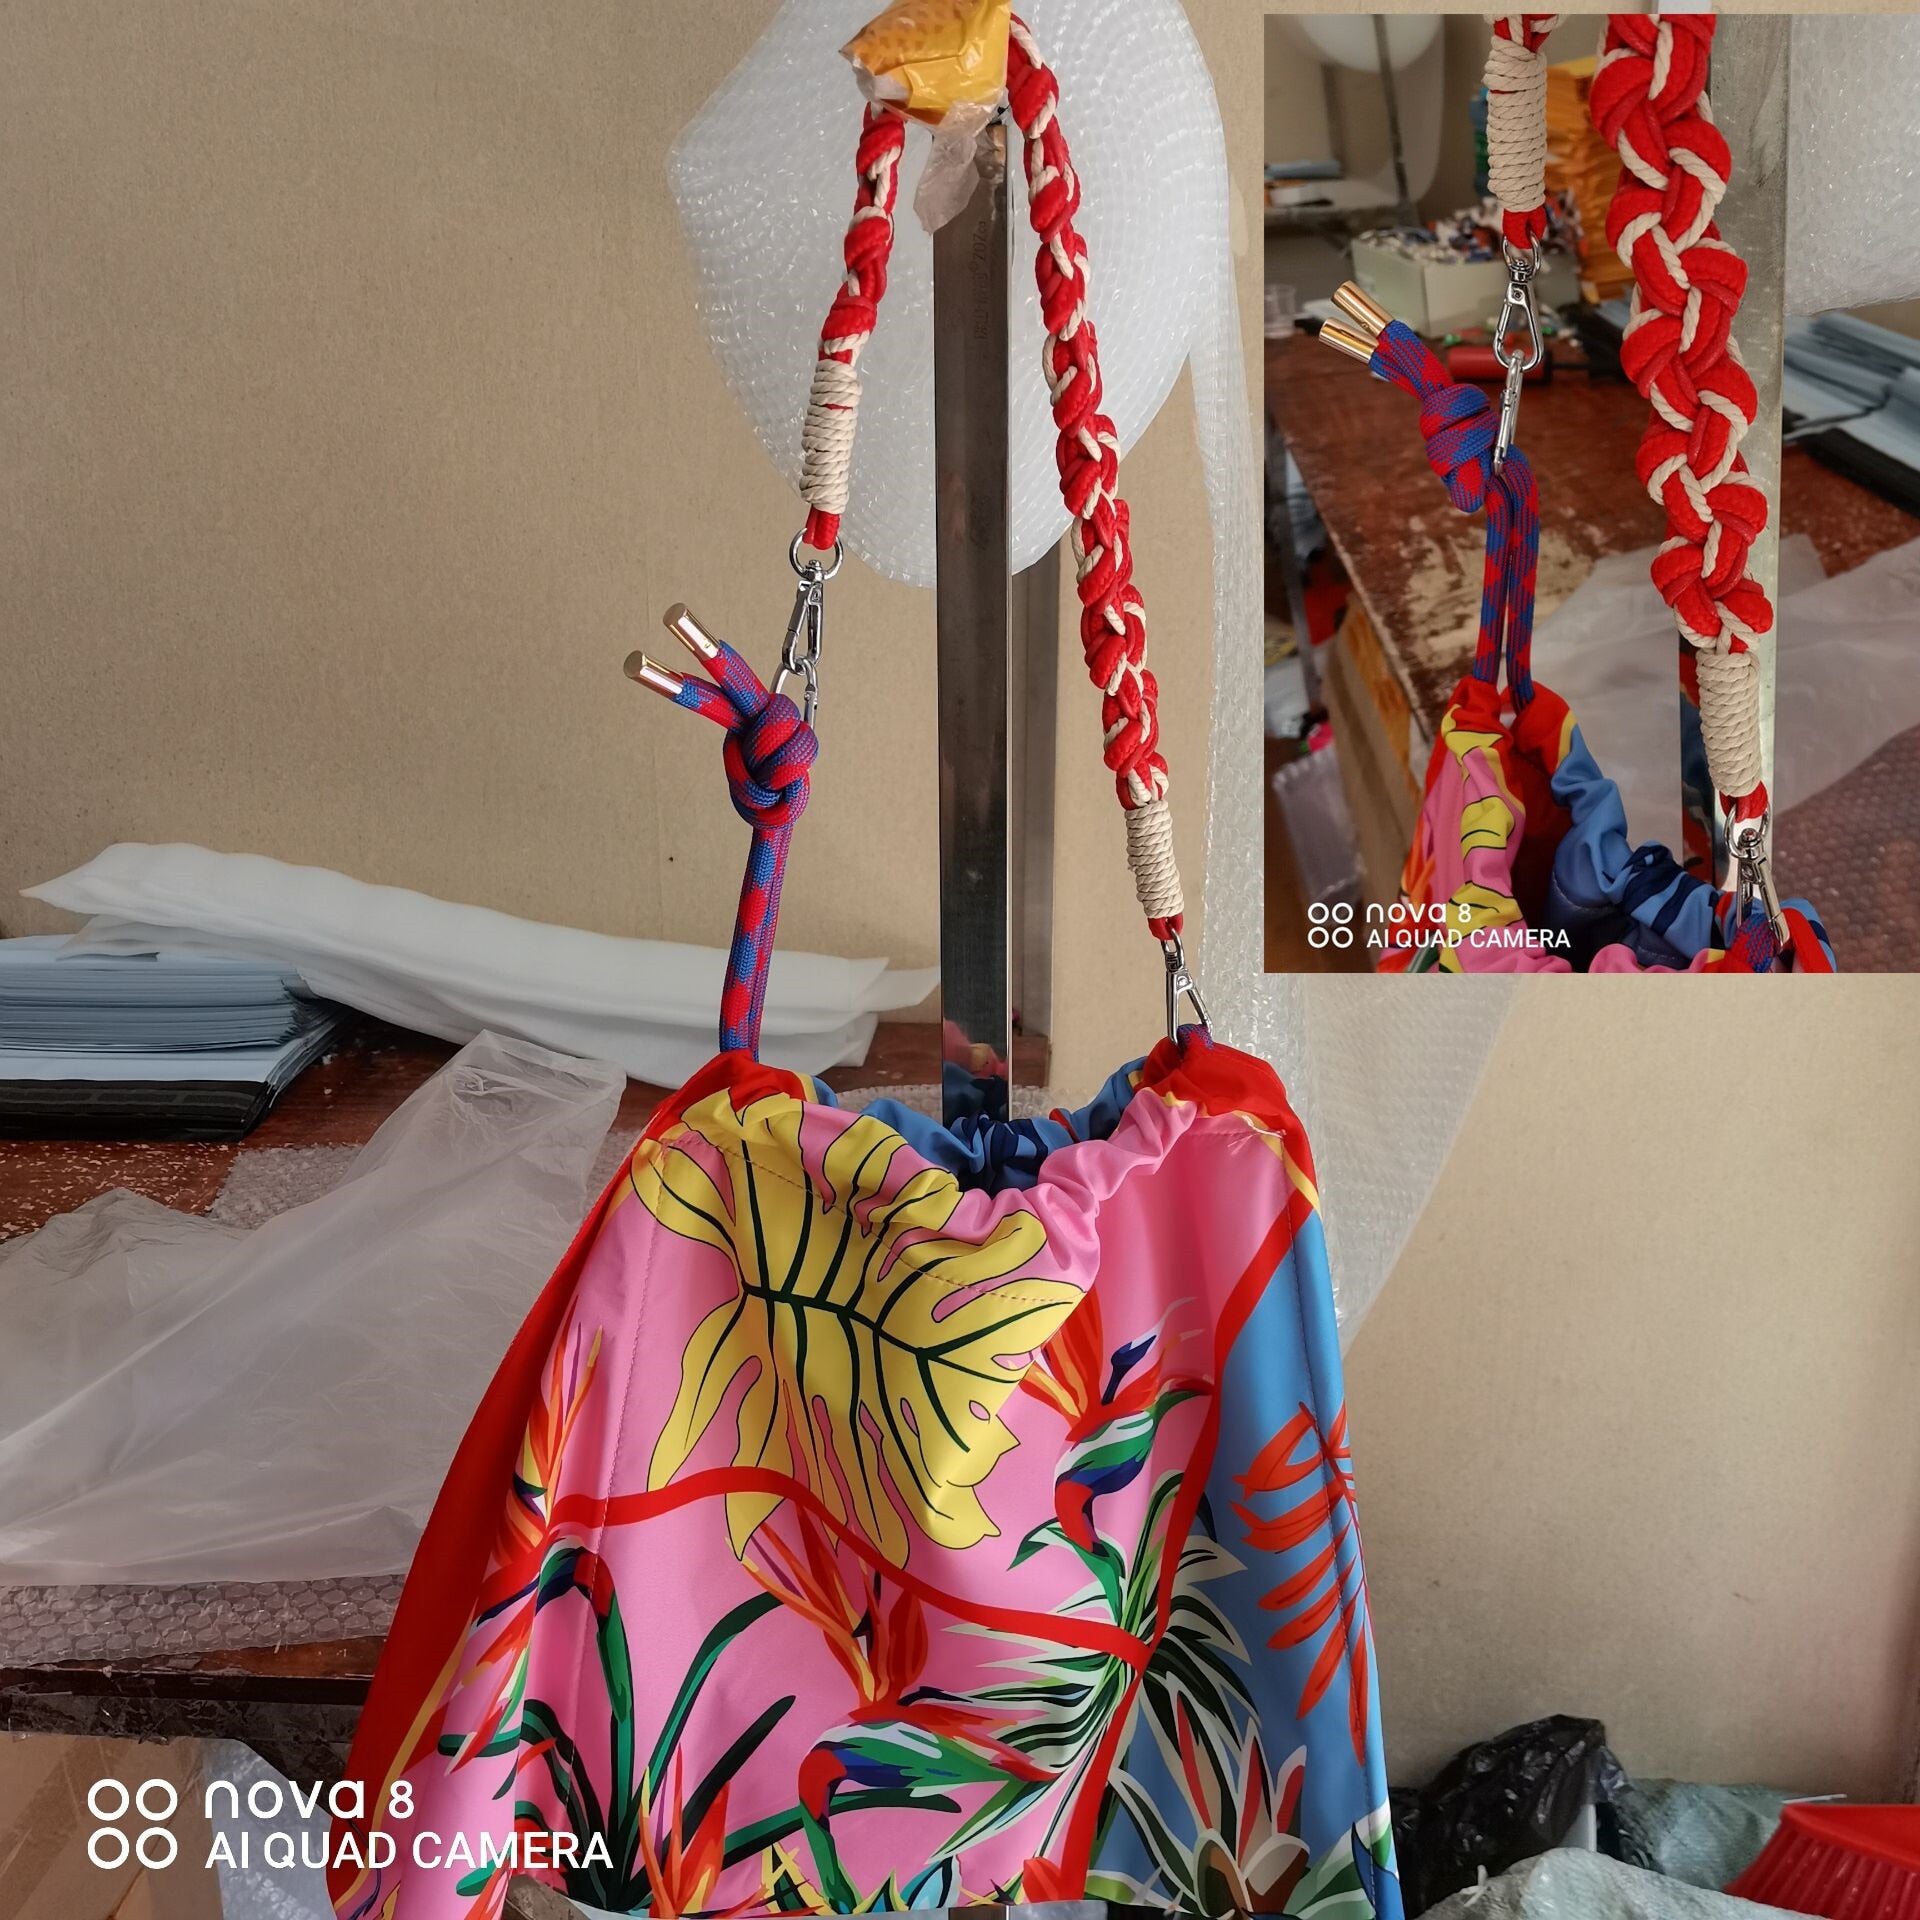 Women's Silk scarf Shoulder Bag Flowers Handbag Fashion Large Capacity Reusable Shopping Bag Versatile Simple Messenger Bag